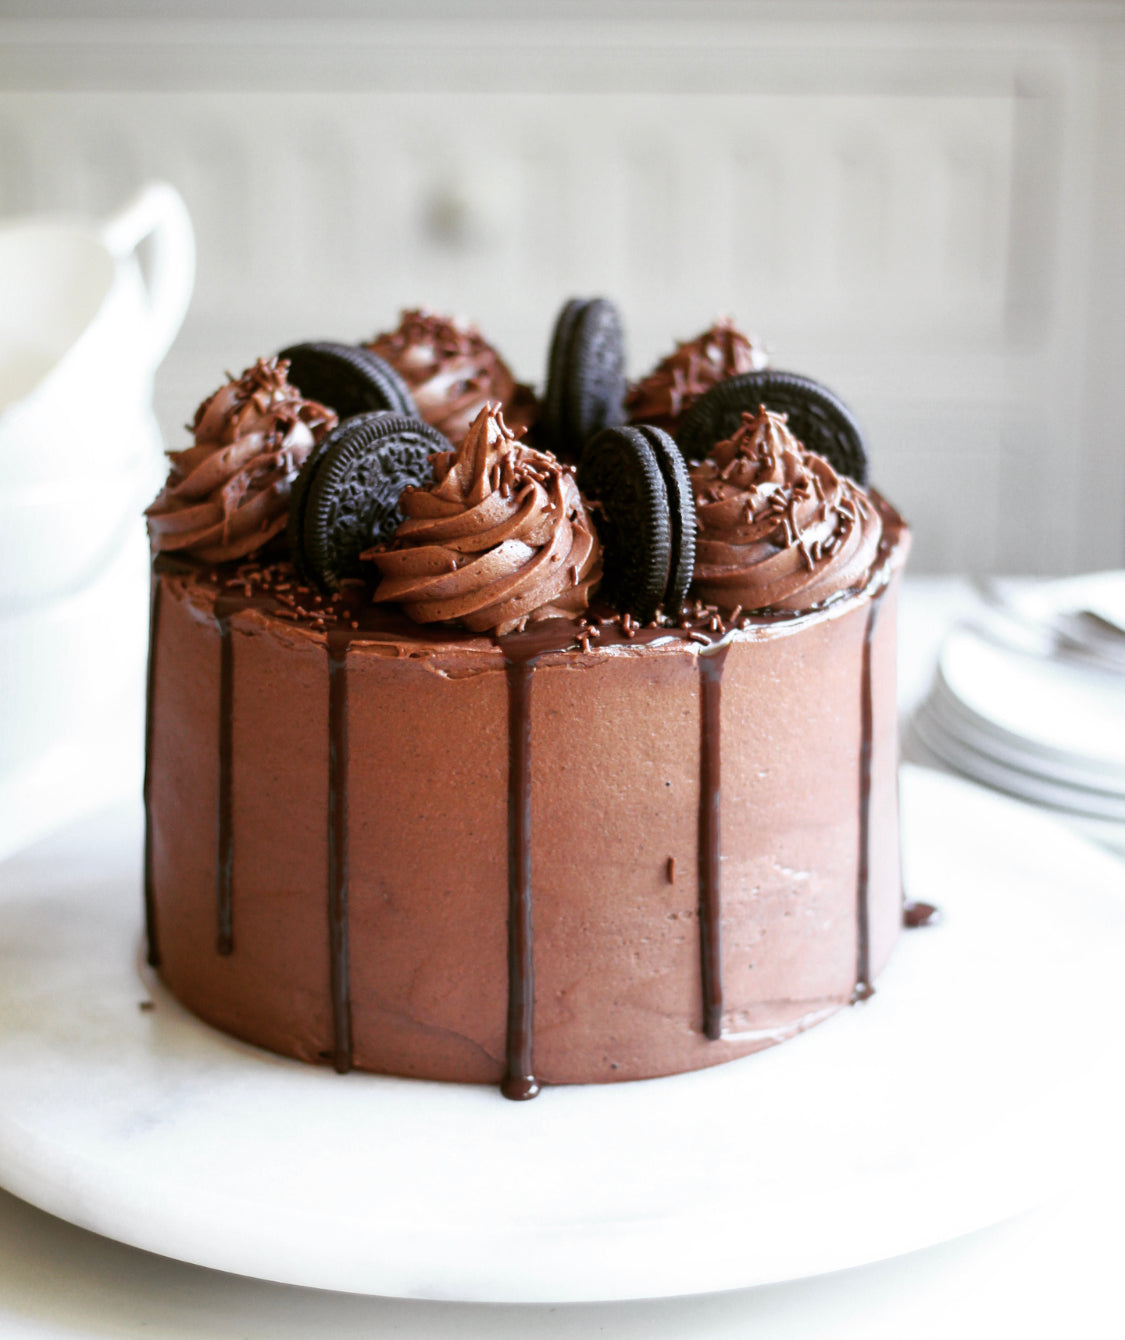 Chilli Chocolate Cake | BBC Good Food